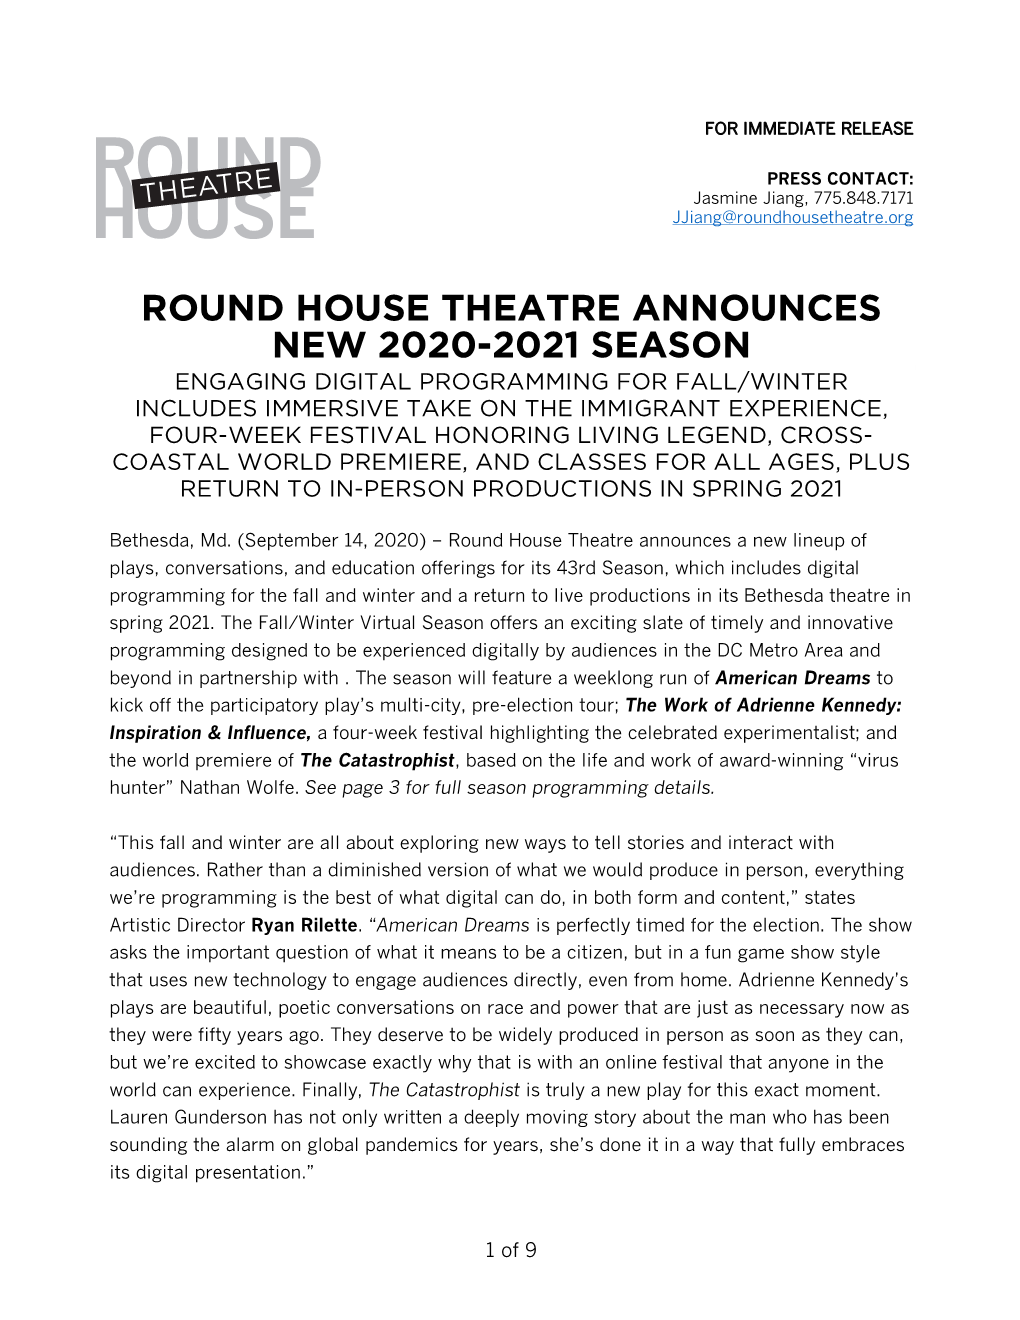 Round House Theatre Announces New 2020-2021 Season